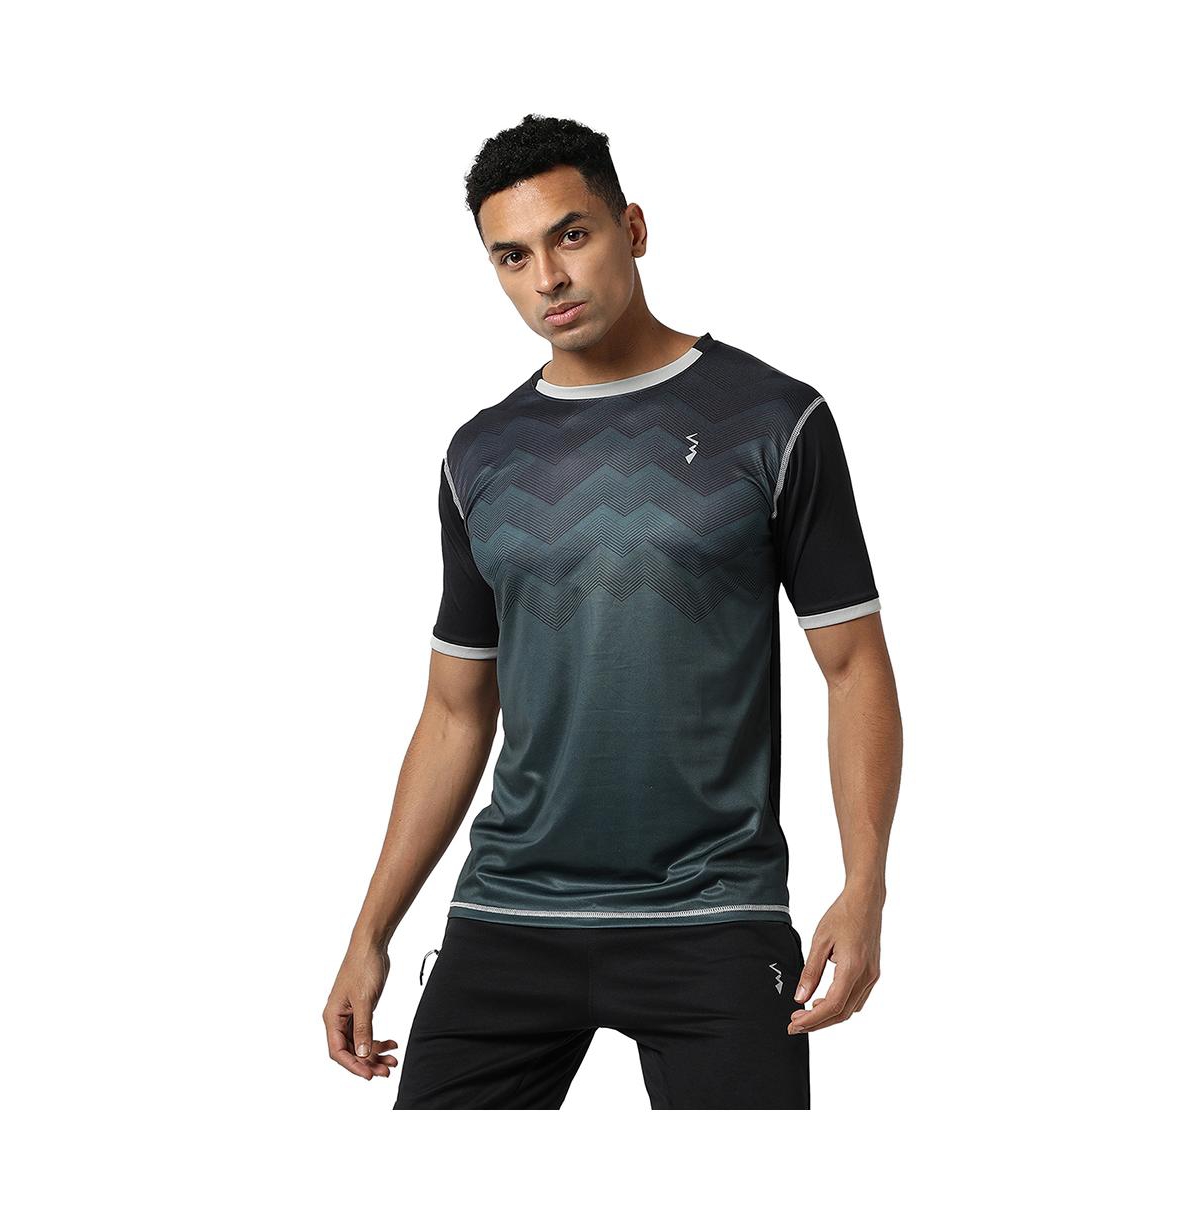 Men's Charcoal Grey Geometric Active wear T-Shirt - Charcoal grey